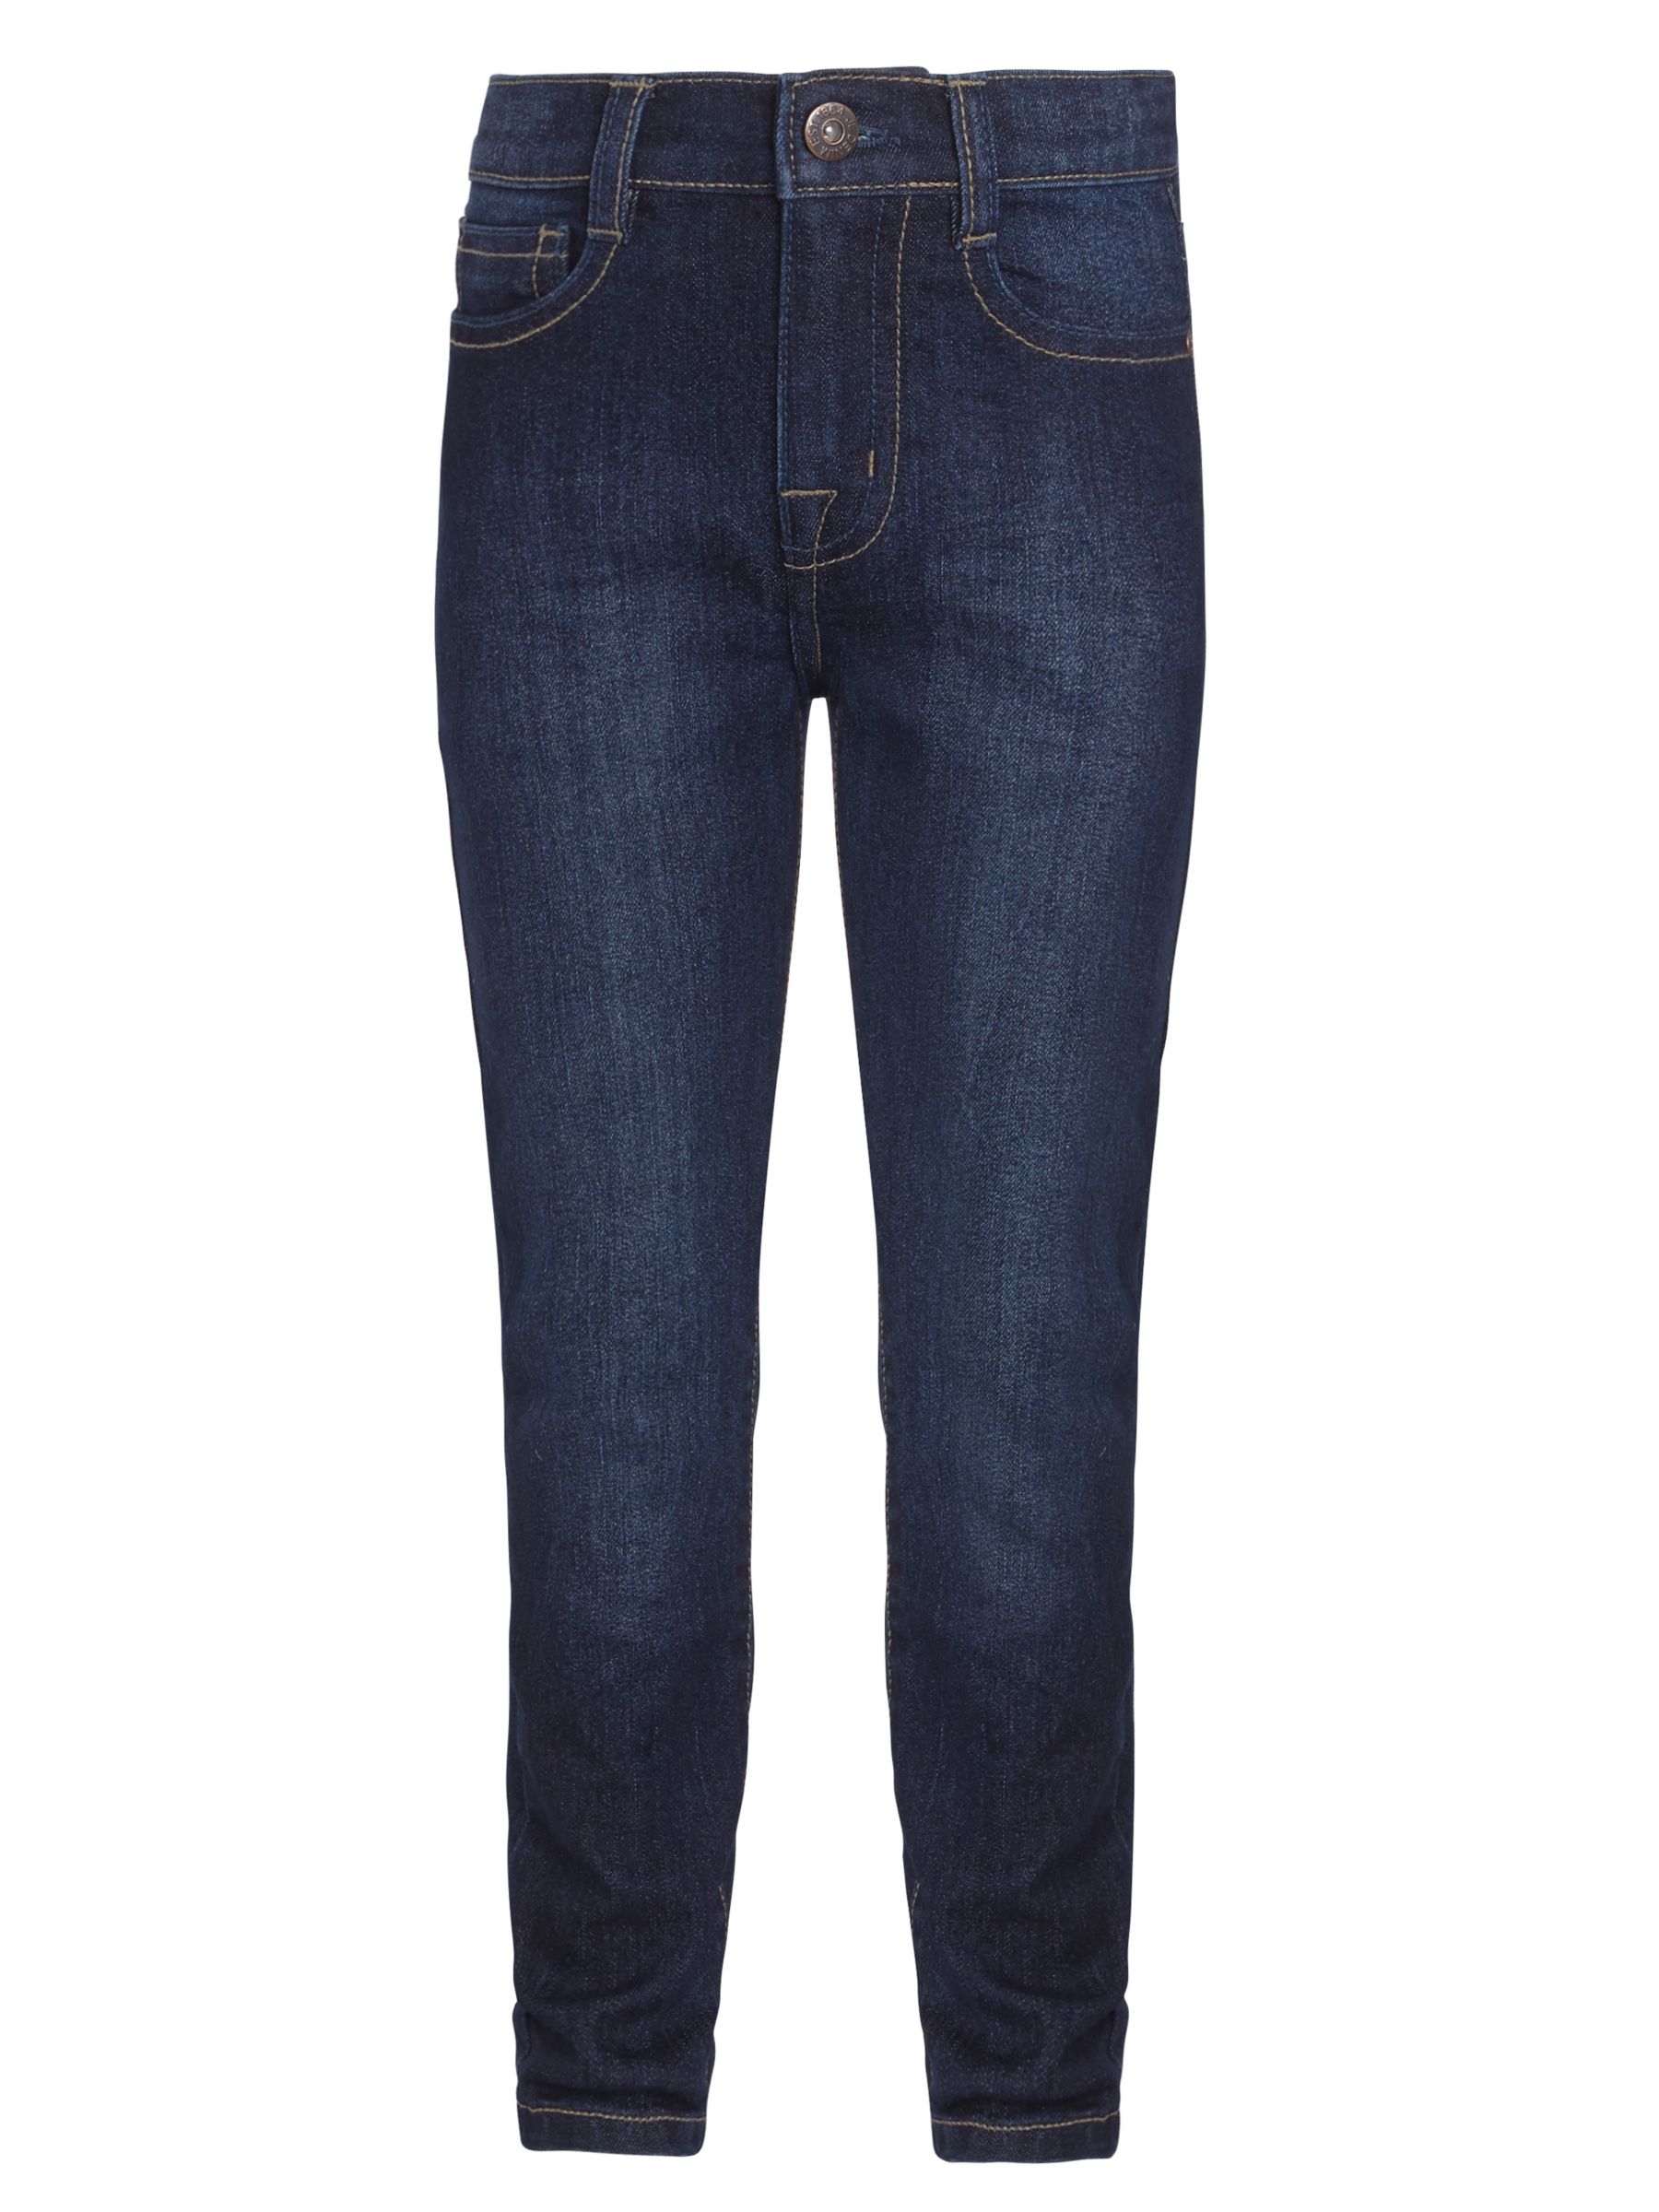 John Lewis & Partners Boys' Skinny-Leg Denim Jeans, Mid Blue